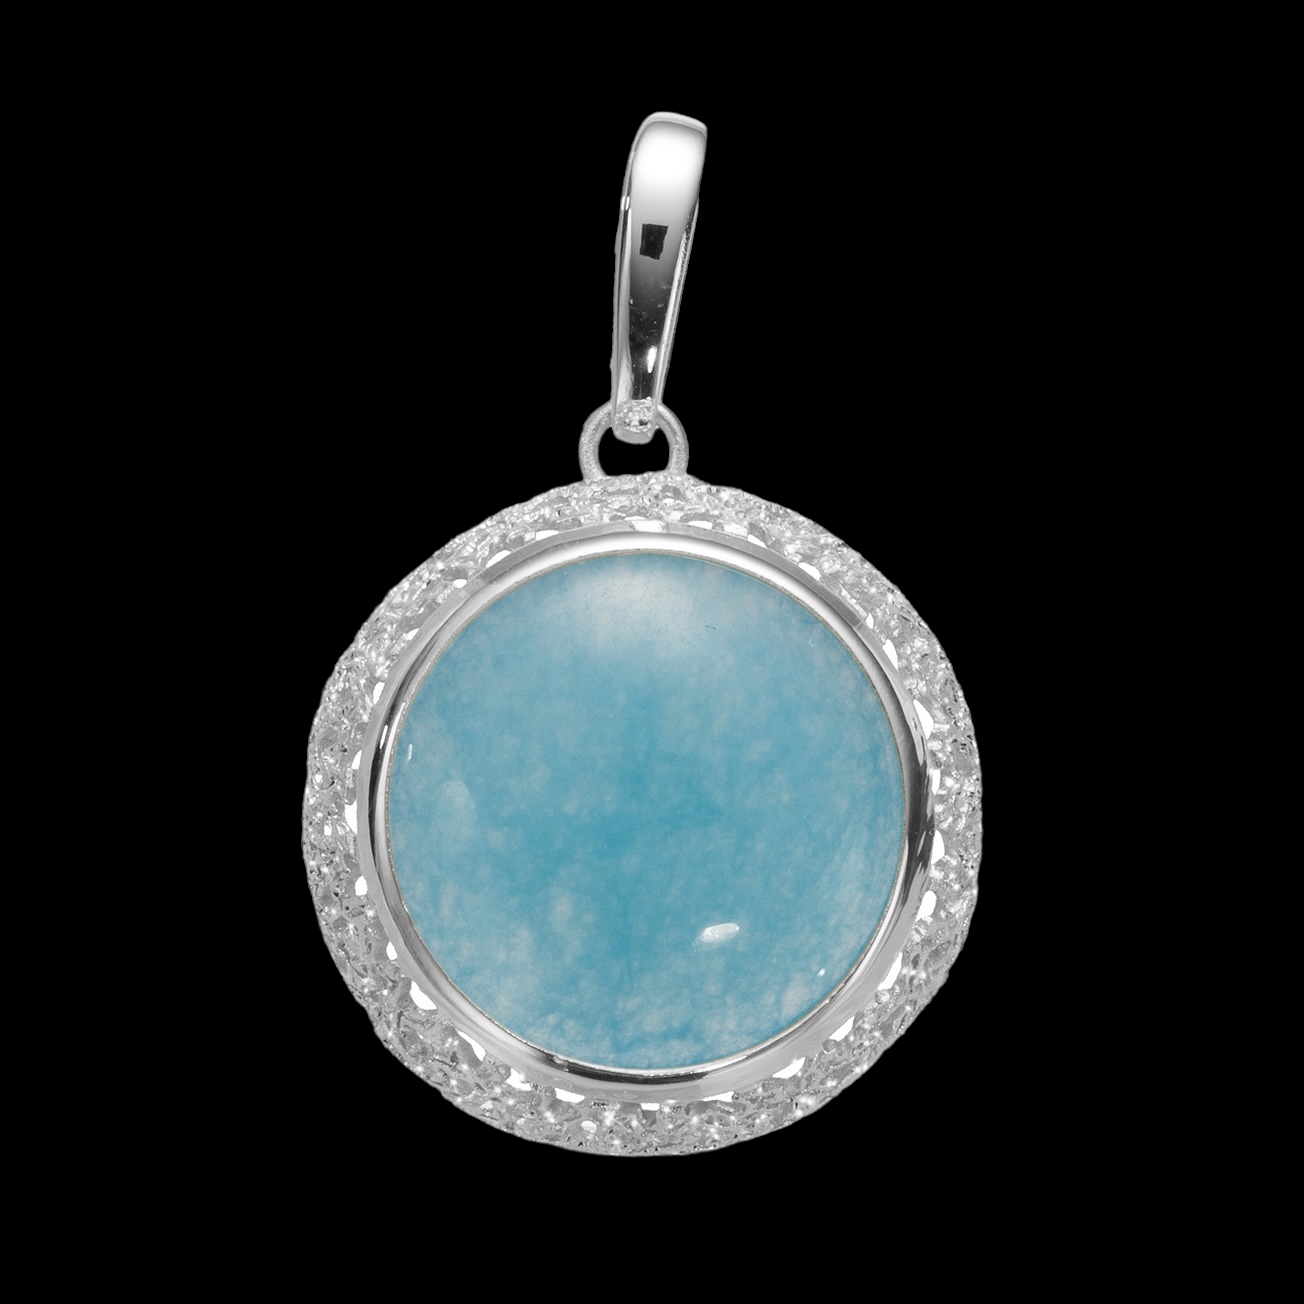 Created silver pendant with a blue quartz stone